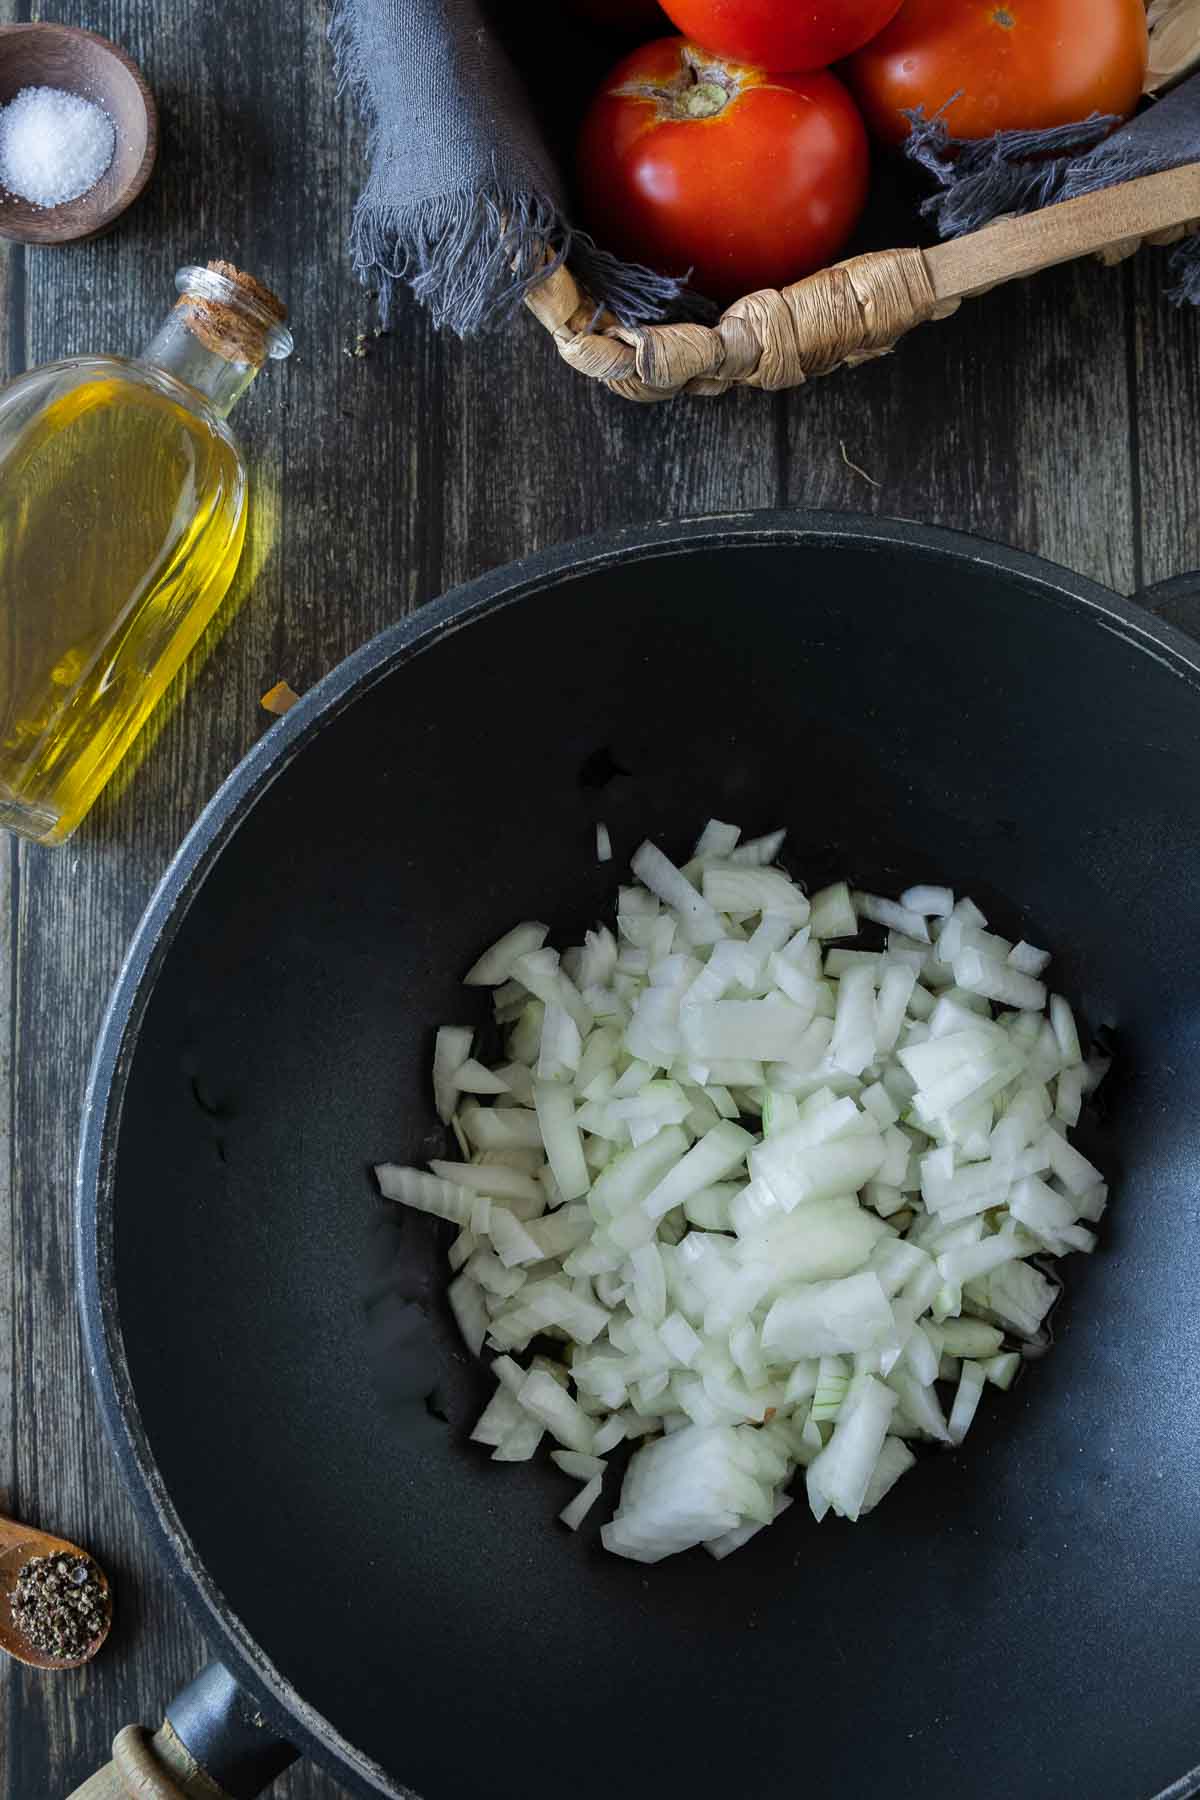 Diced onions inside a dark pan.